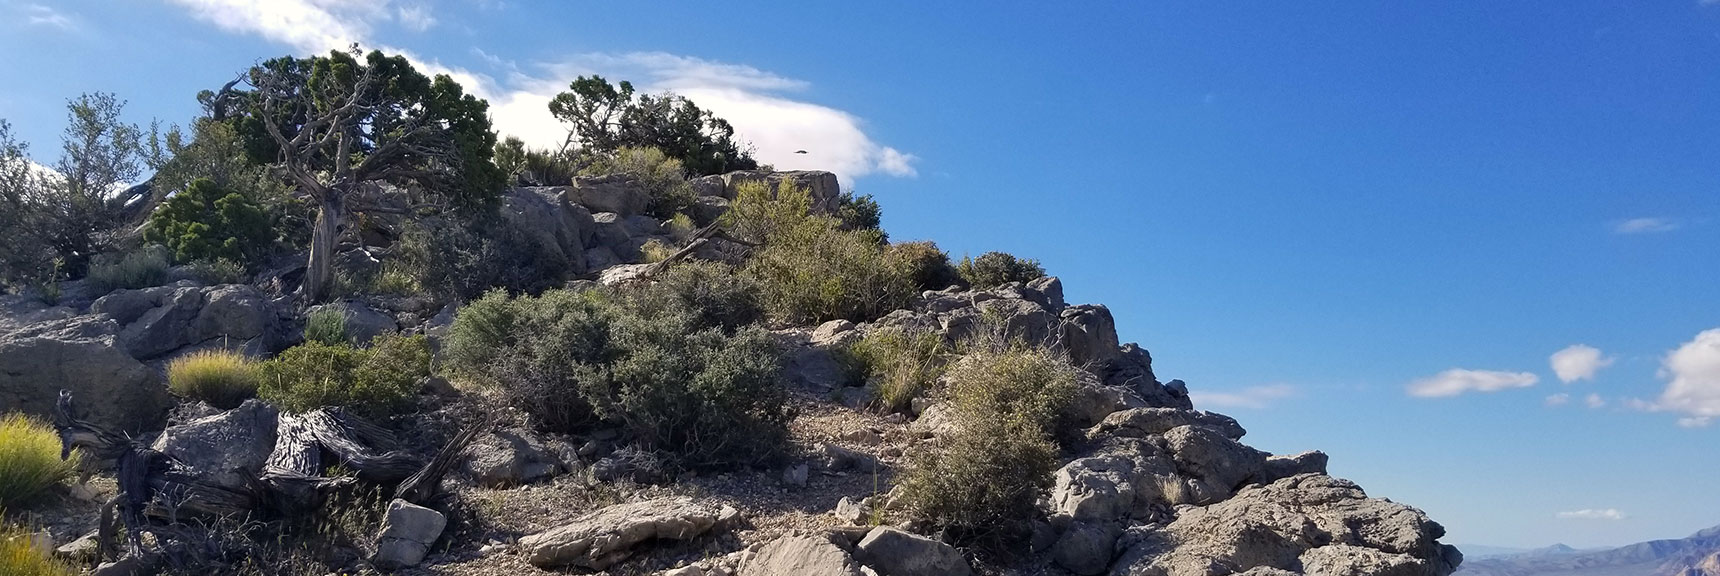 Turtlehead Peak Summit in Red Rock Park, Nevada